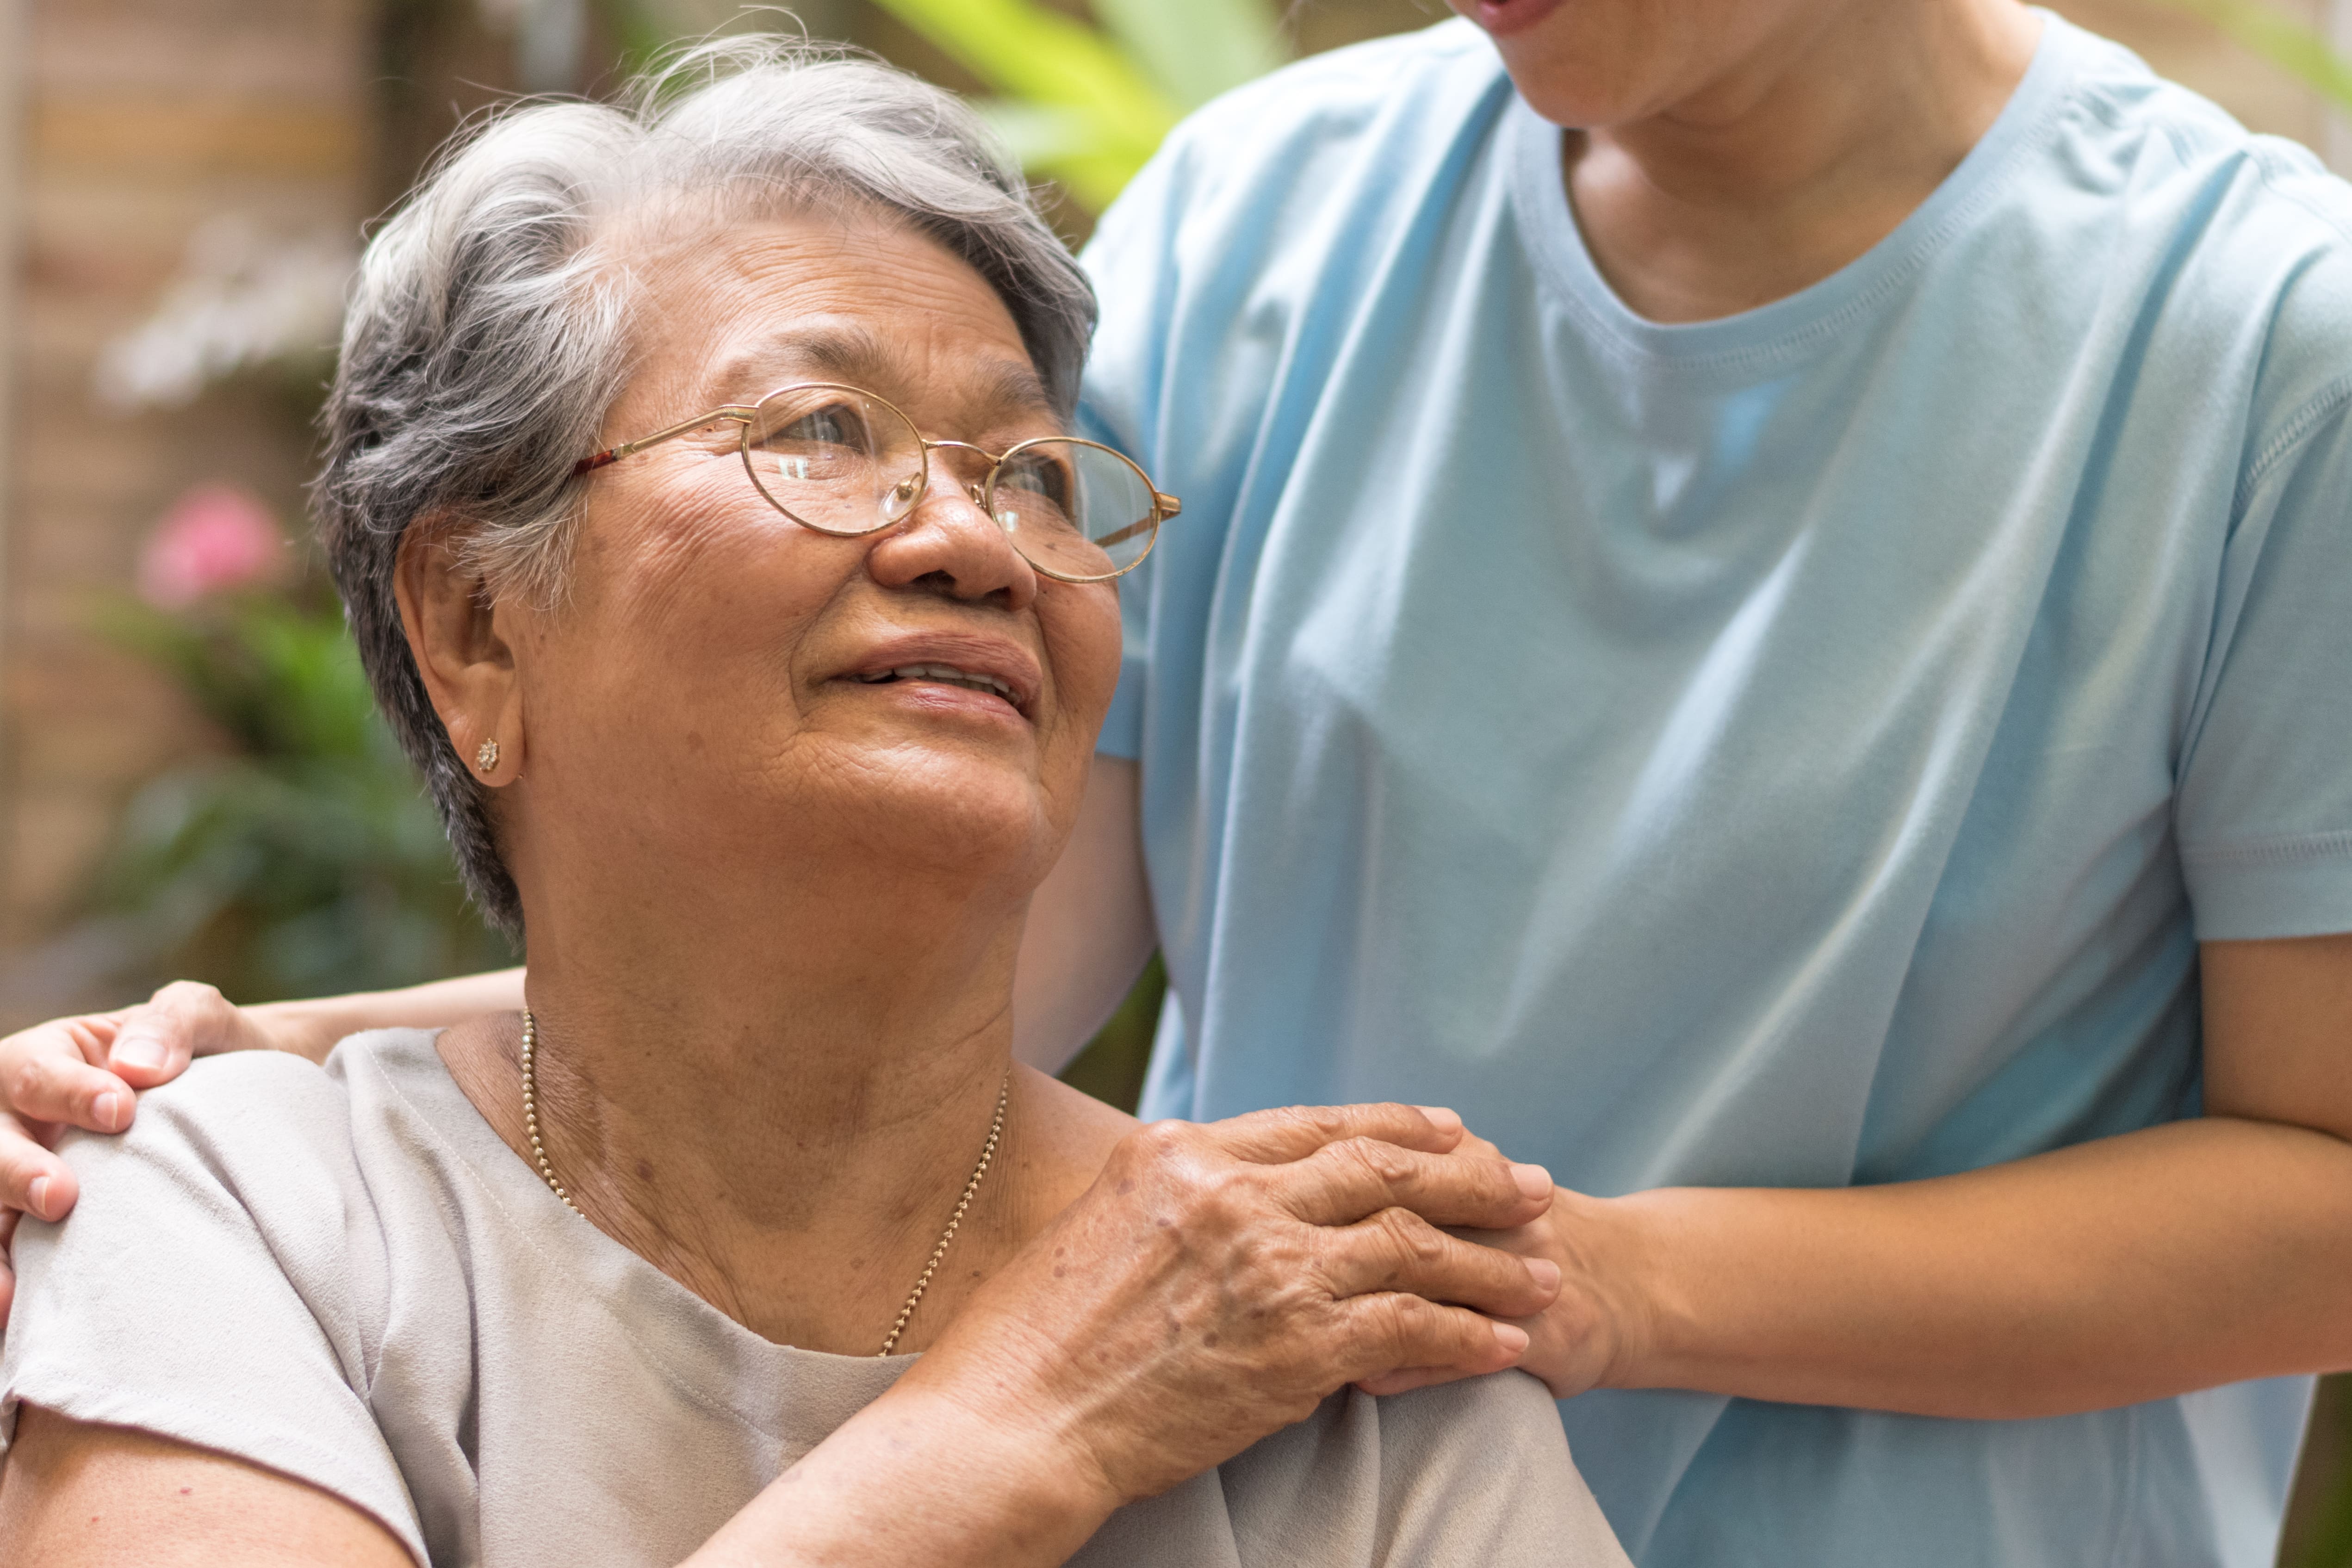 A caregiver comforting an older adult